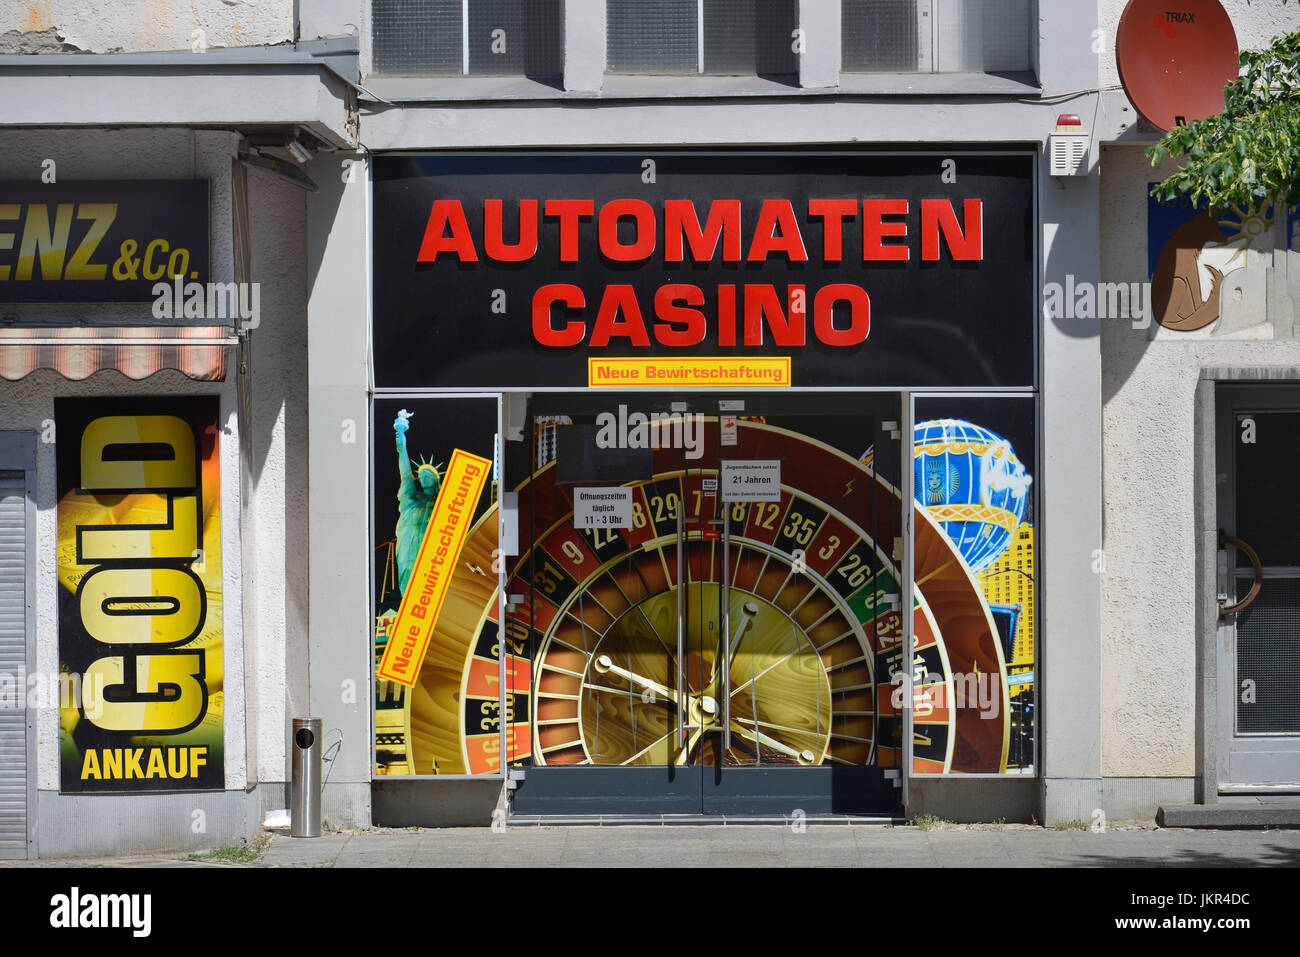 Machine casino, Kurt's Schumacher place, village Reinicken, Berlin, Germany, Automatencasino, Kurt-Schumacher-Platz, Reinickendorf, Deutschland Stock Photo